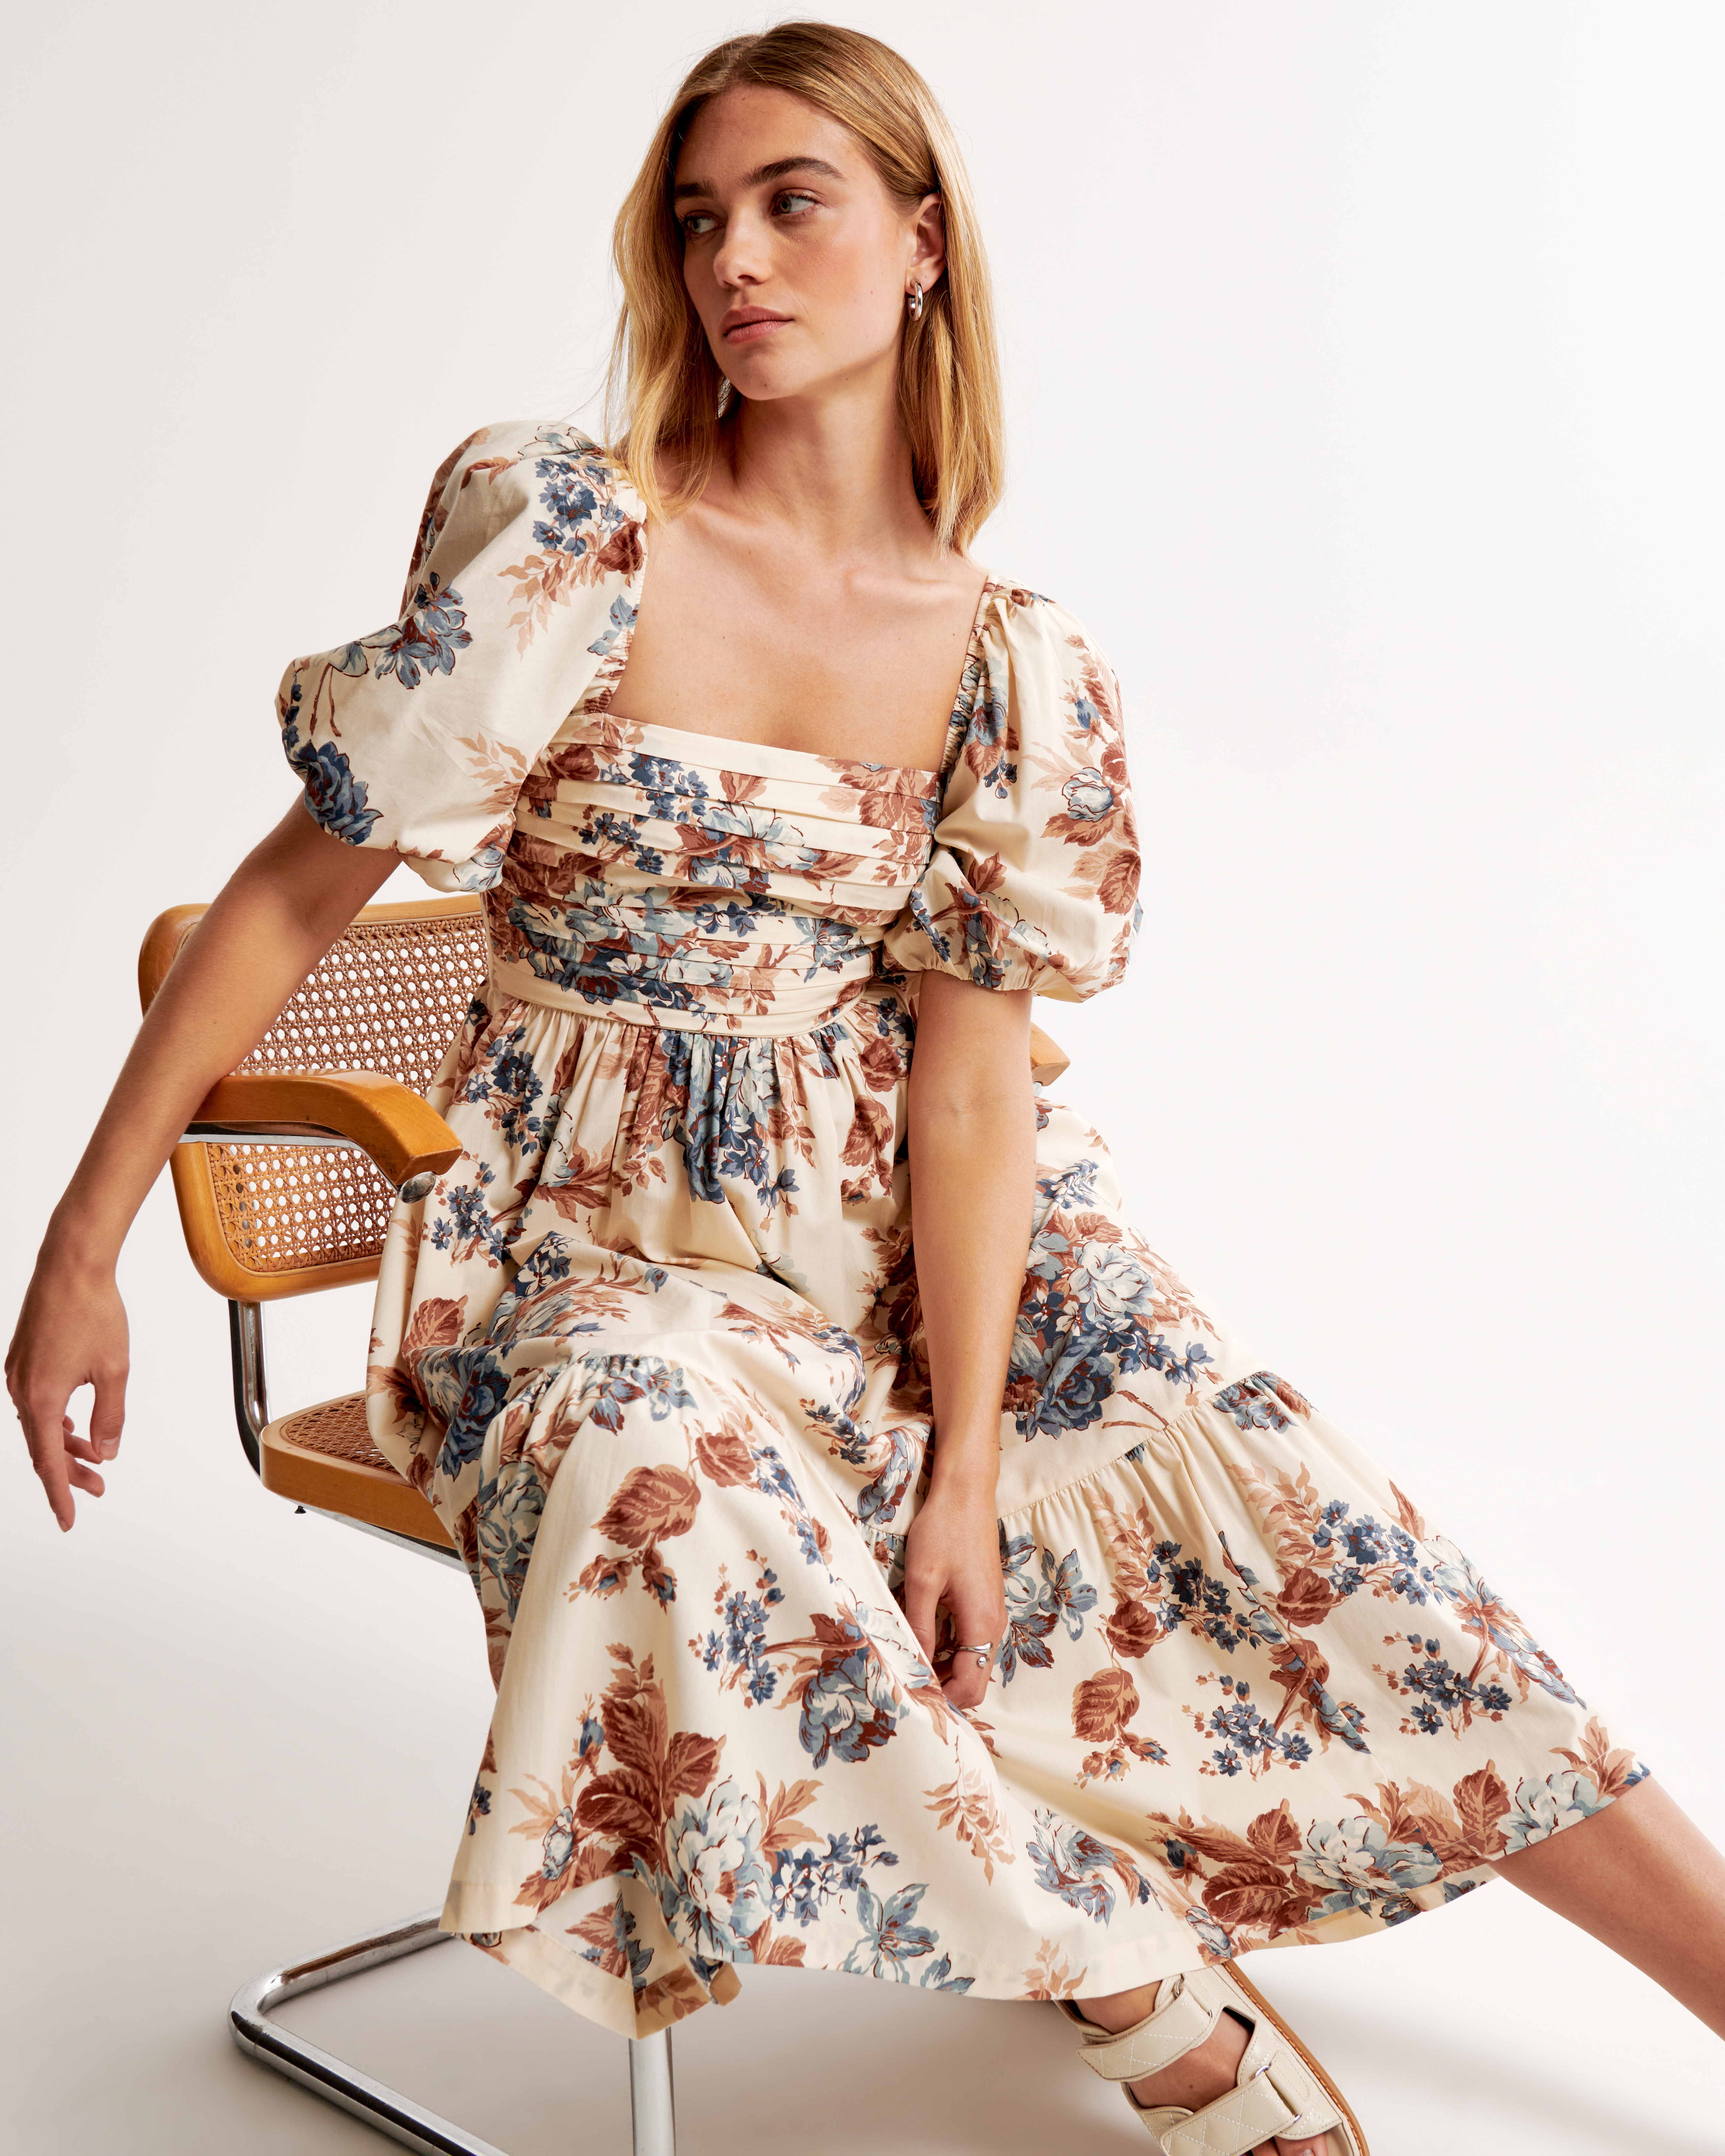 abercrombie floral dress